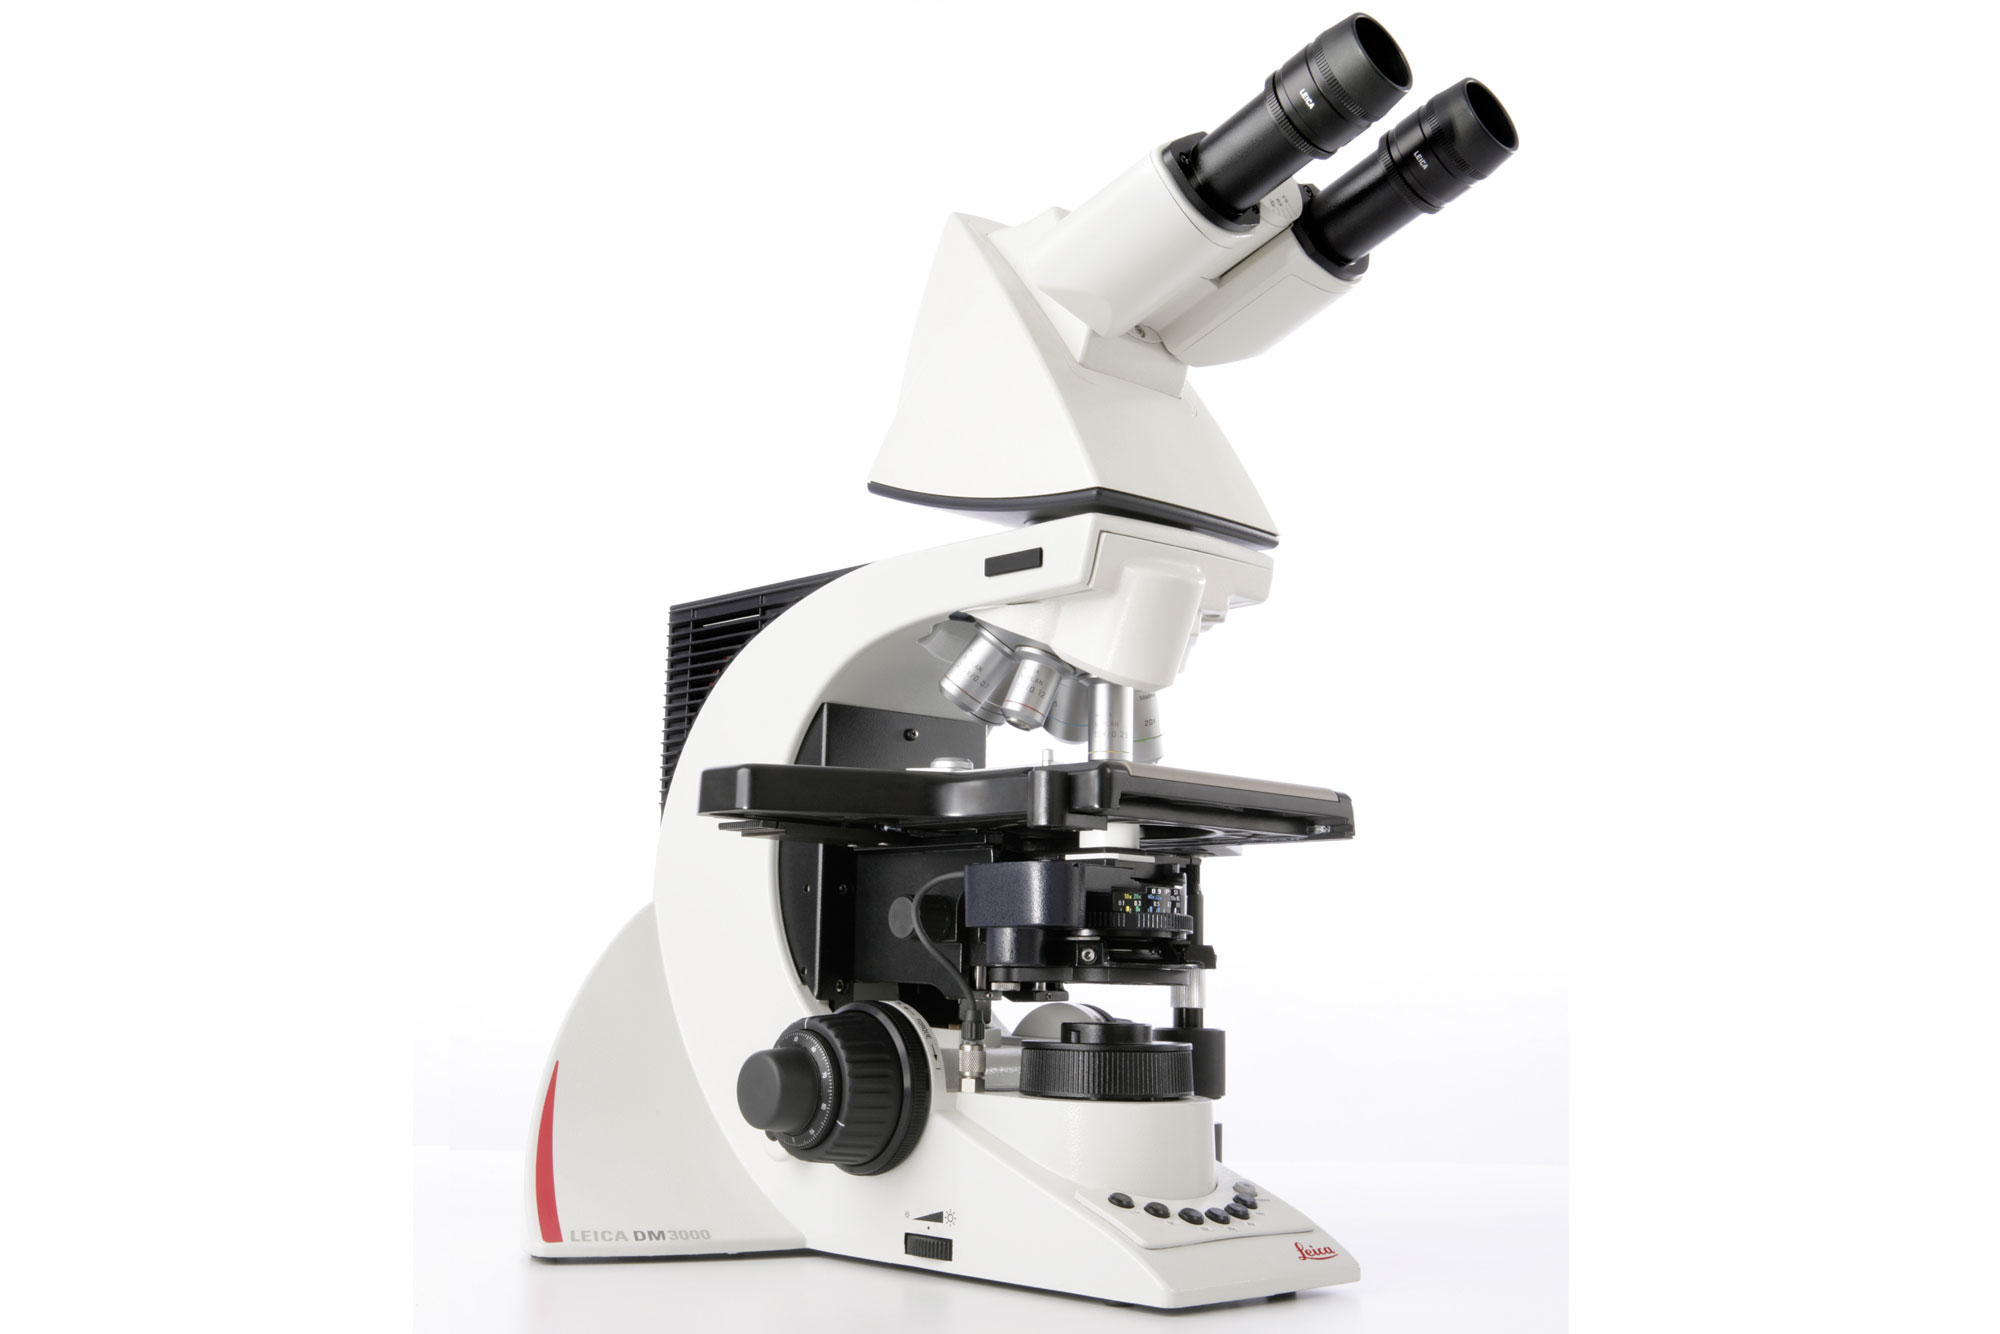 Leica DM3000 / DM3000 LED Uniquely Ergonomic System Microscope With Intelligent Automation